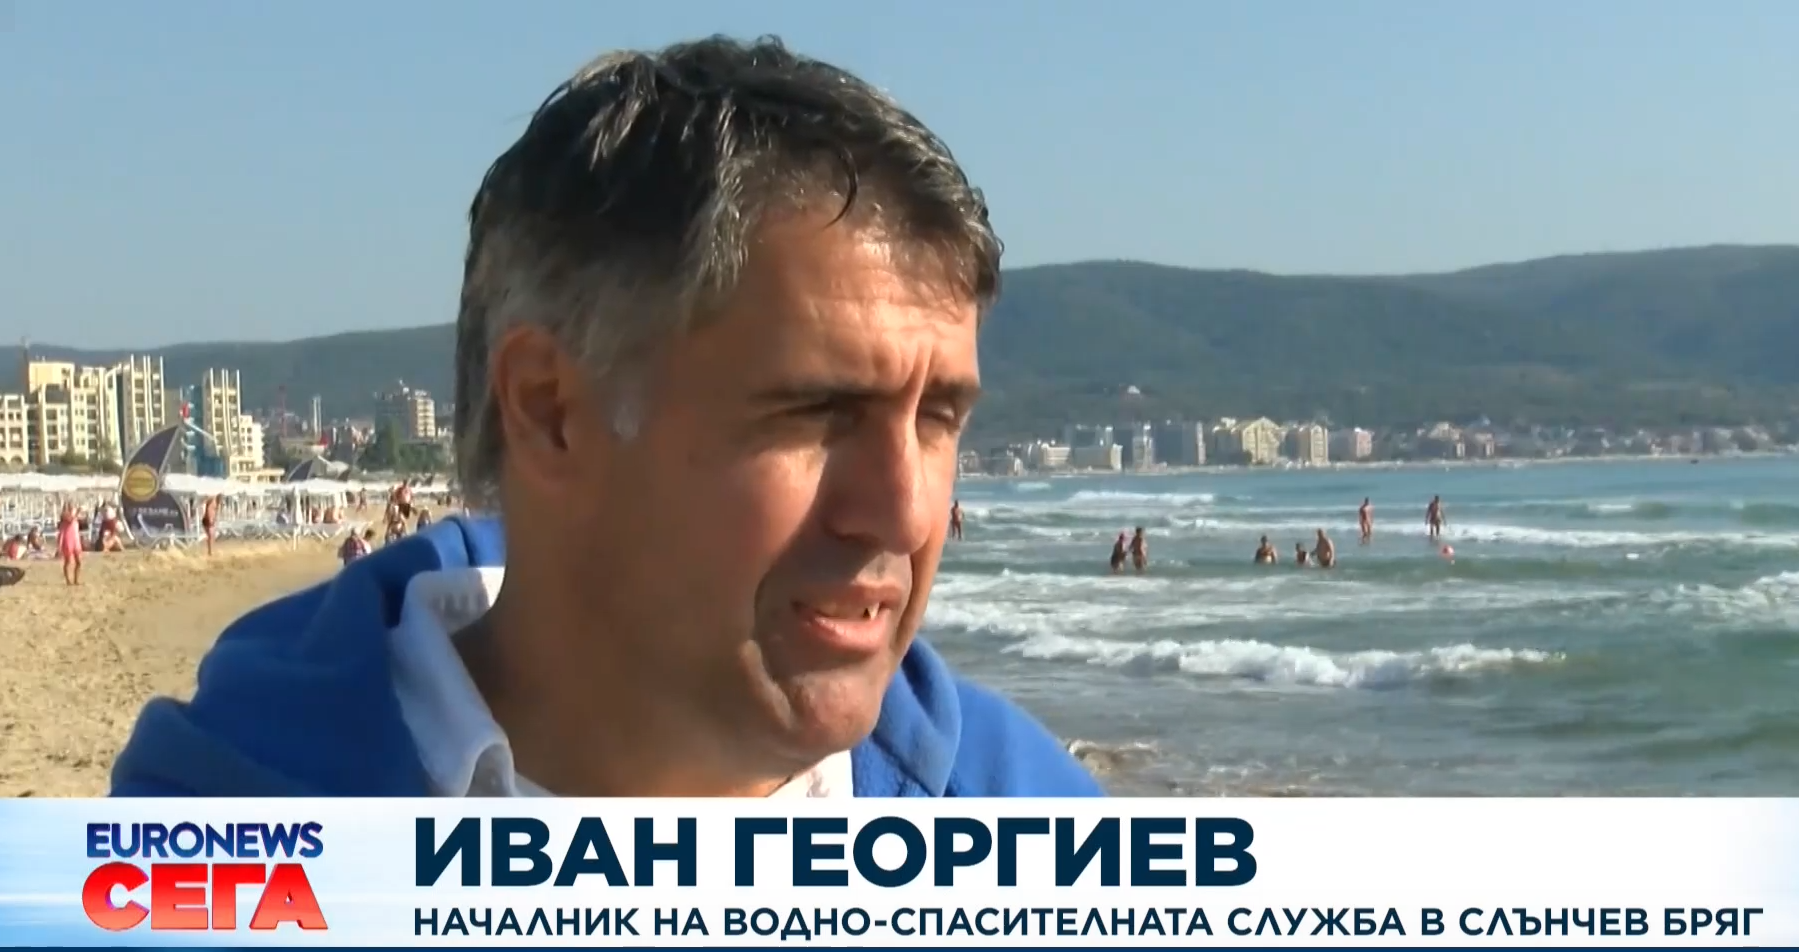 Спасителят който почина вчера в Слънчев бряг спасявайки две украинки